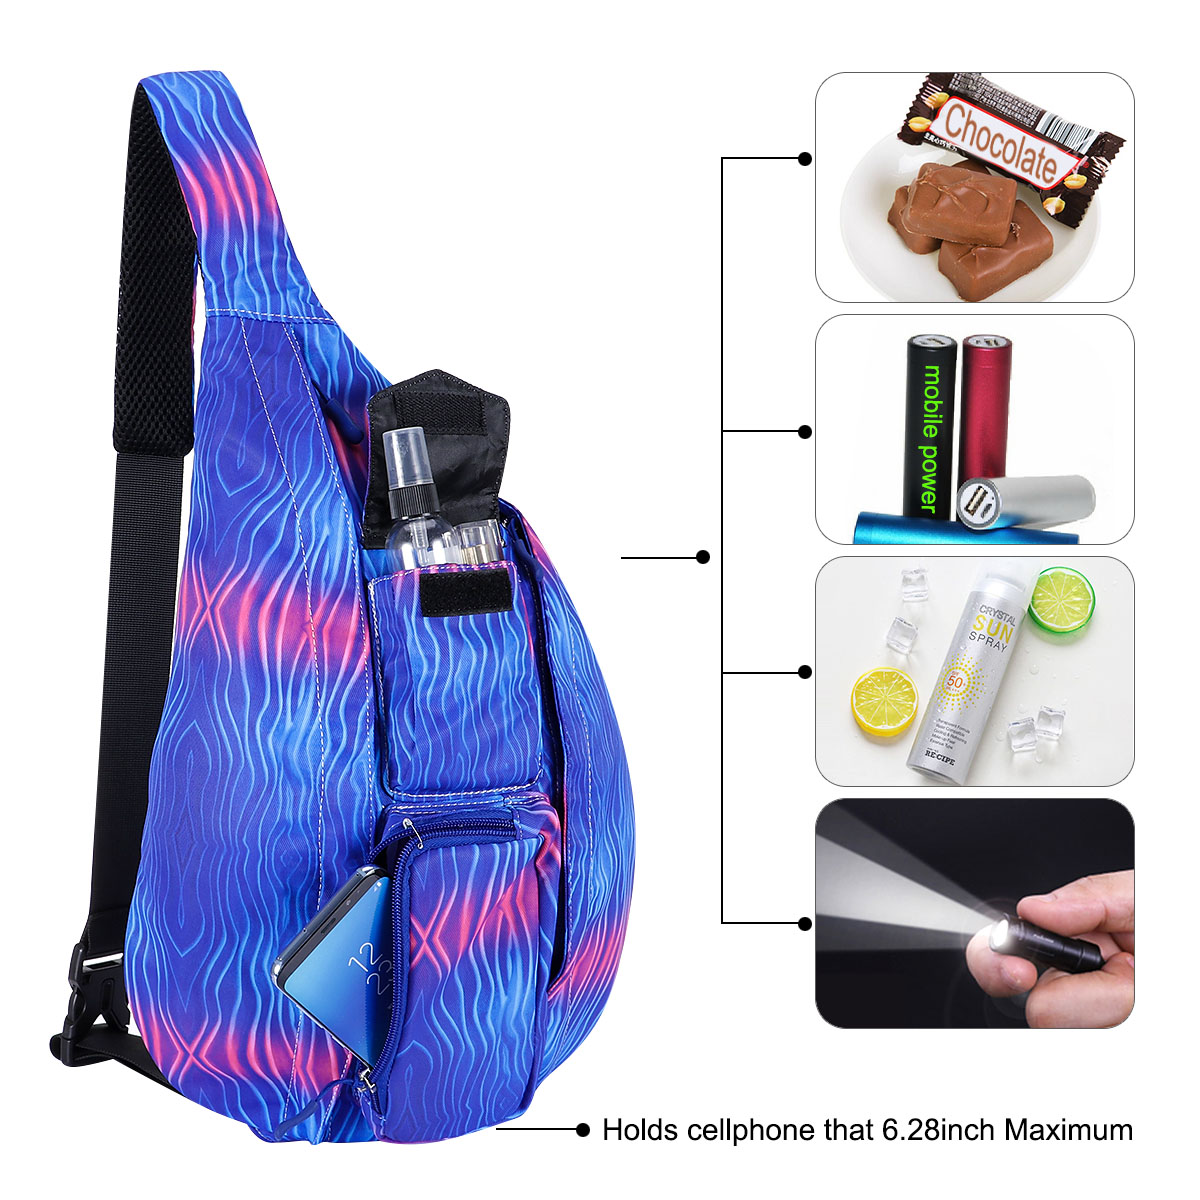 HAWEE Sling Bag Waterproof Backpack or Crossbody Daypack Hiking Backpack Chest Sports Travel Bags for Women, Blue Water Ripple - image 3 of 7